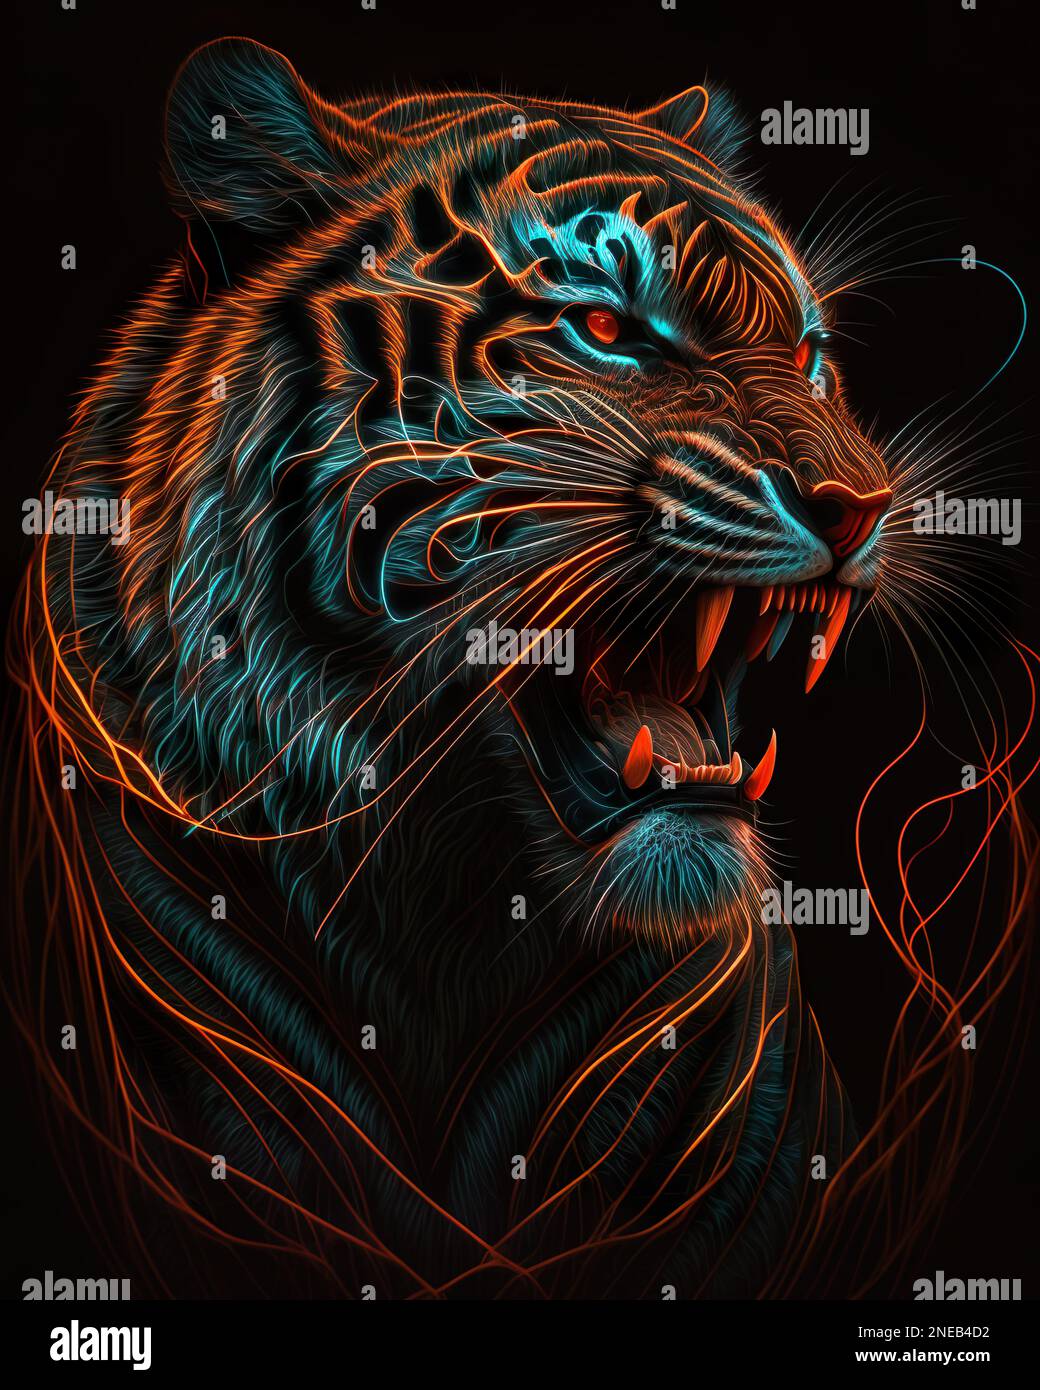 Black-Panther-iPhone-Wallpaper - iPhone Wallpapers | Tiger wallpaper,  Albino animals, Animal wallpaper